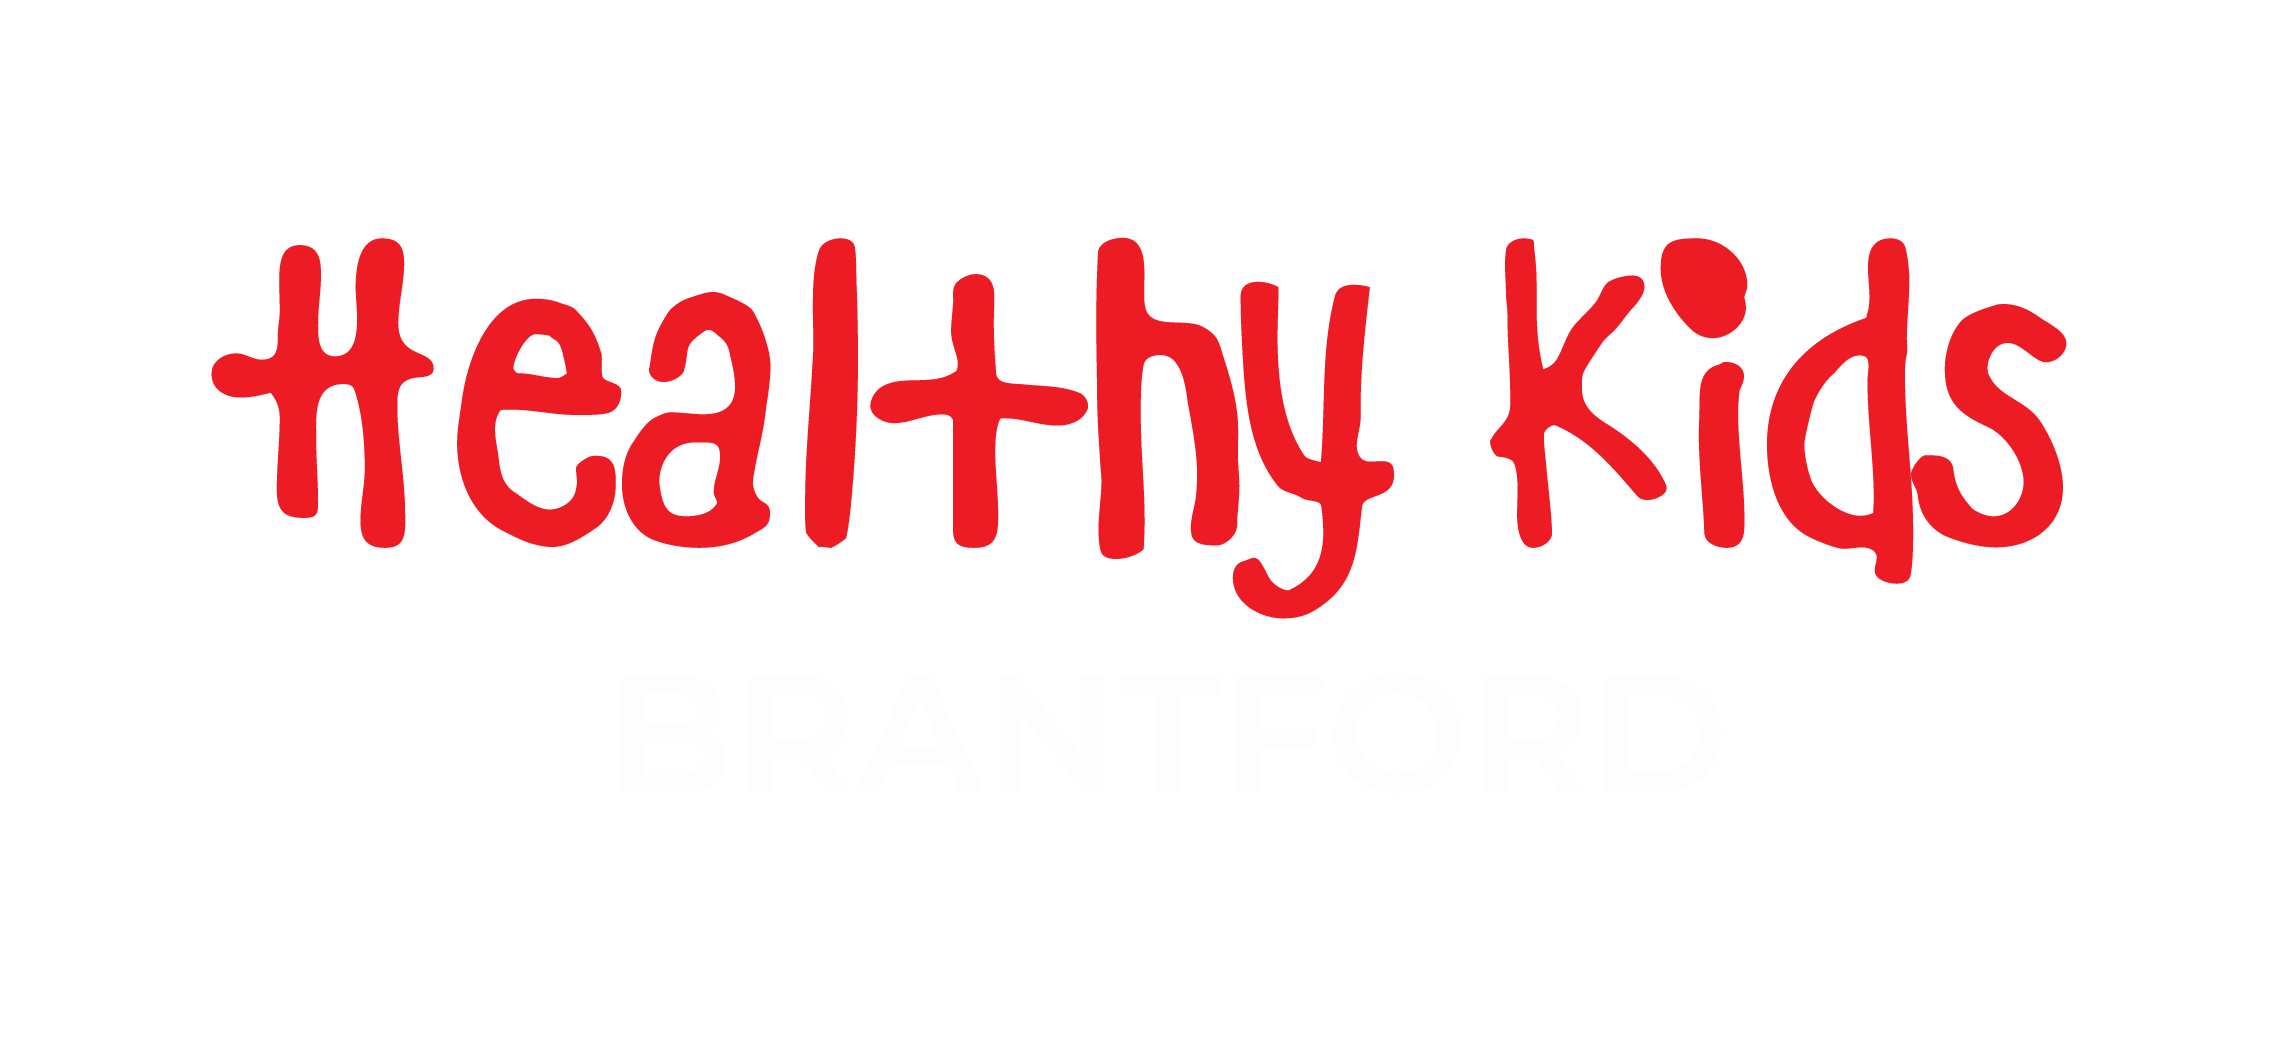 Healthy Kids brantford-brant logo